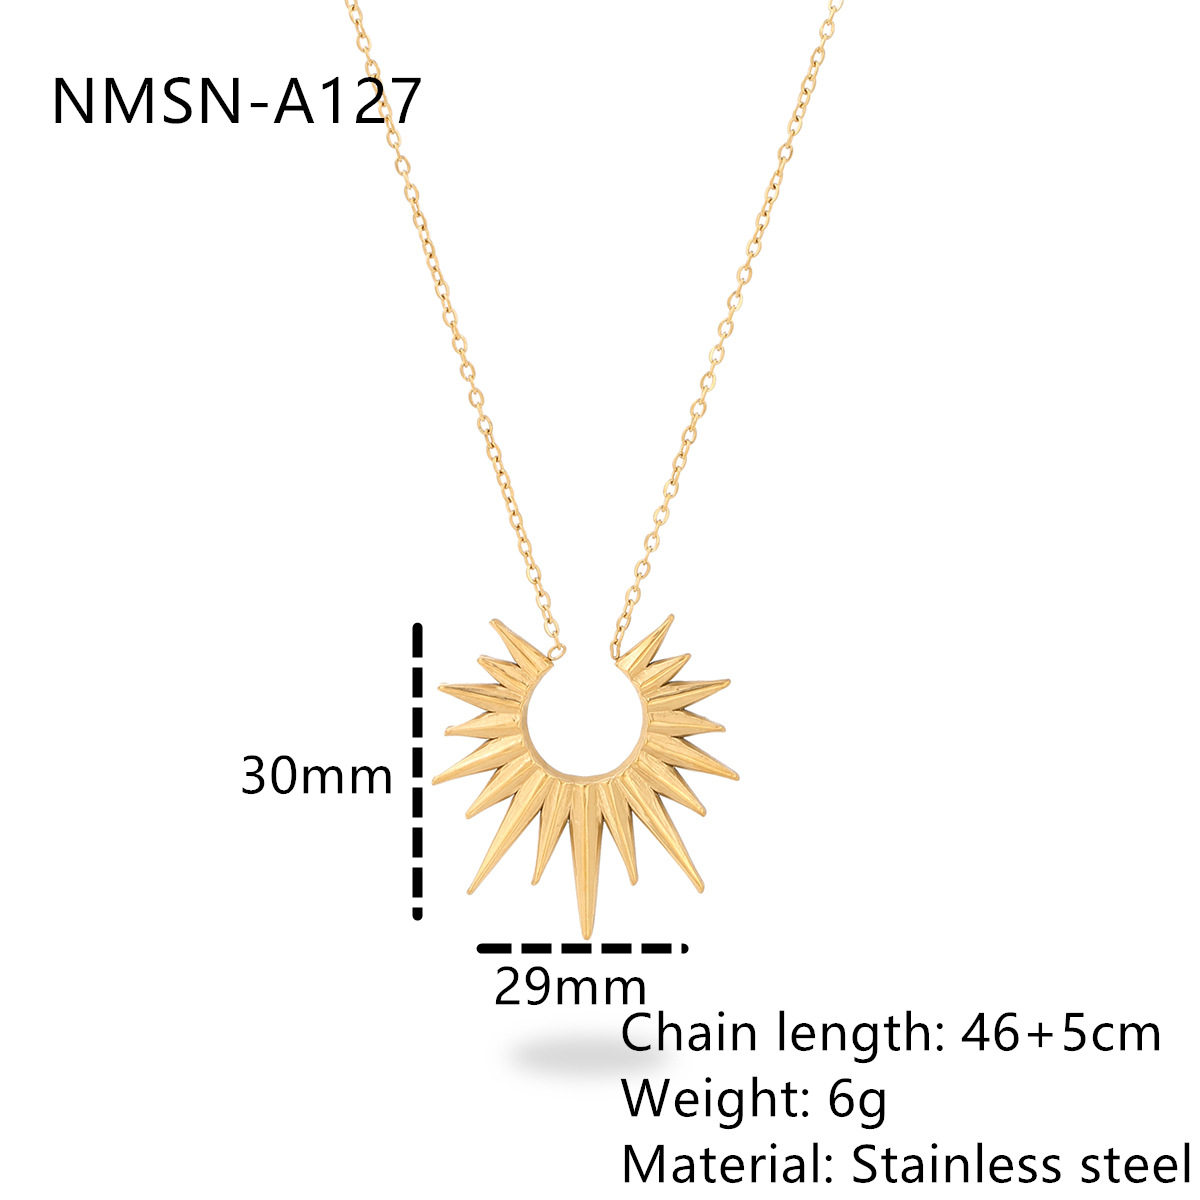 NMSN-A127